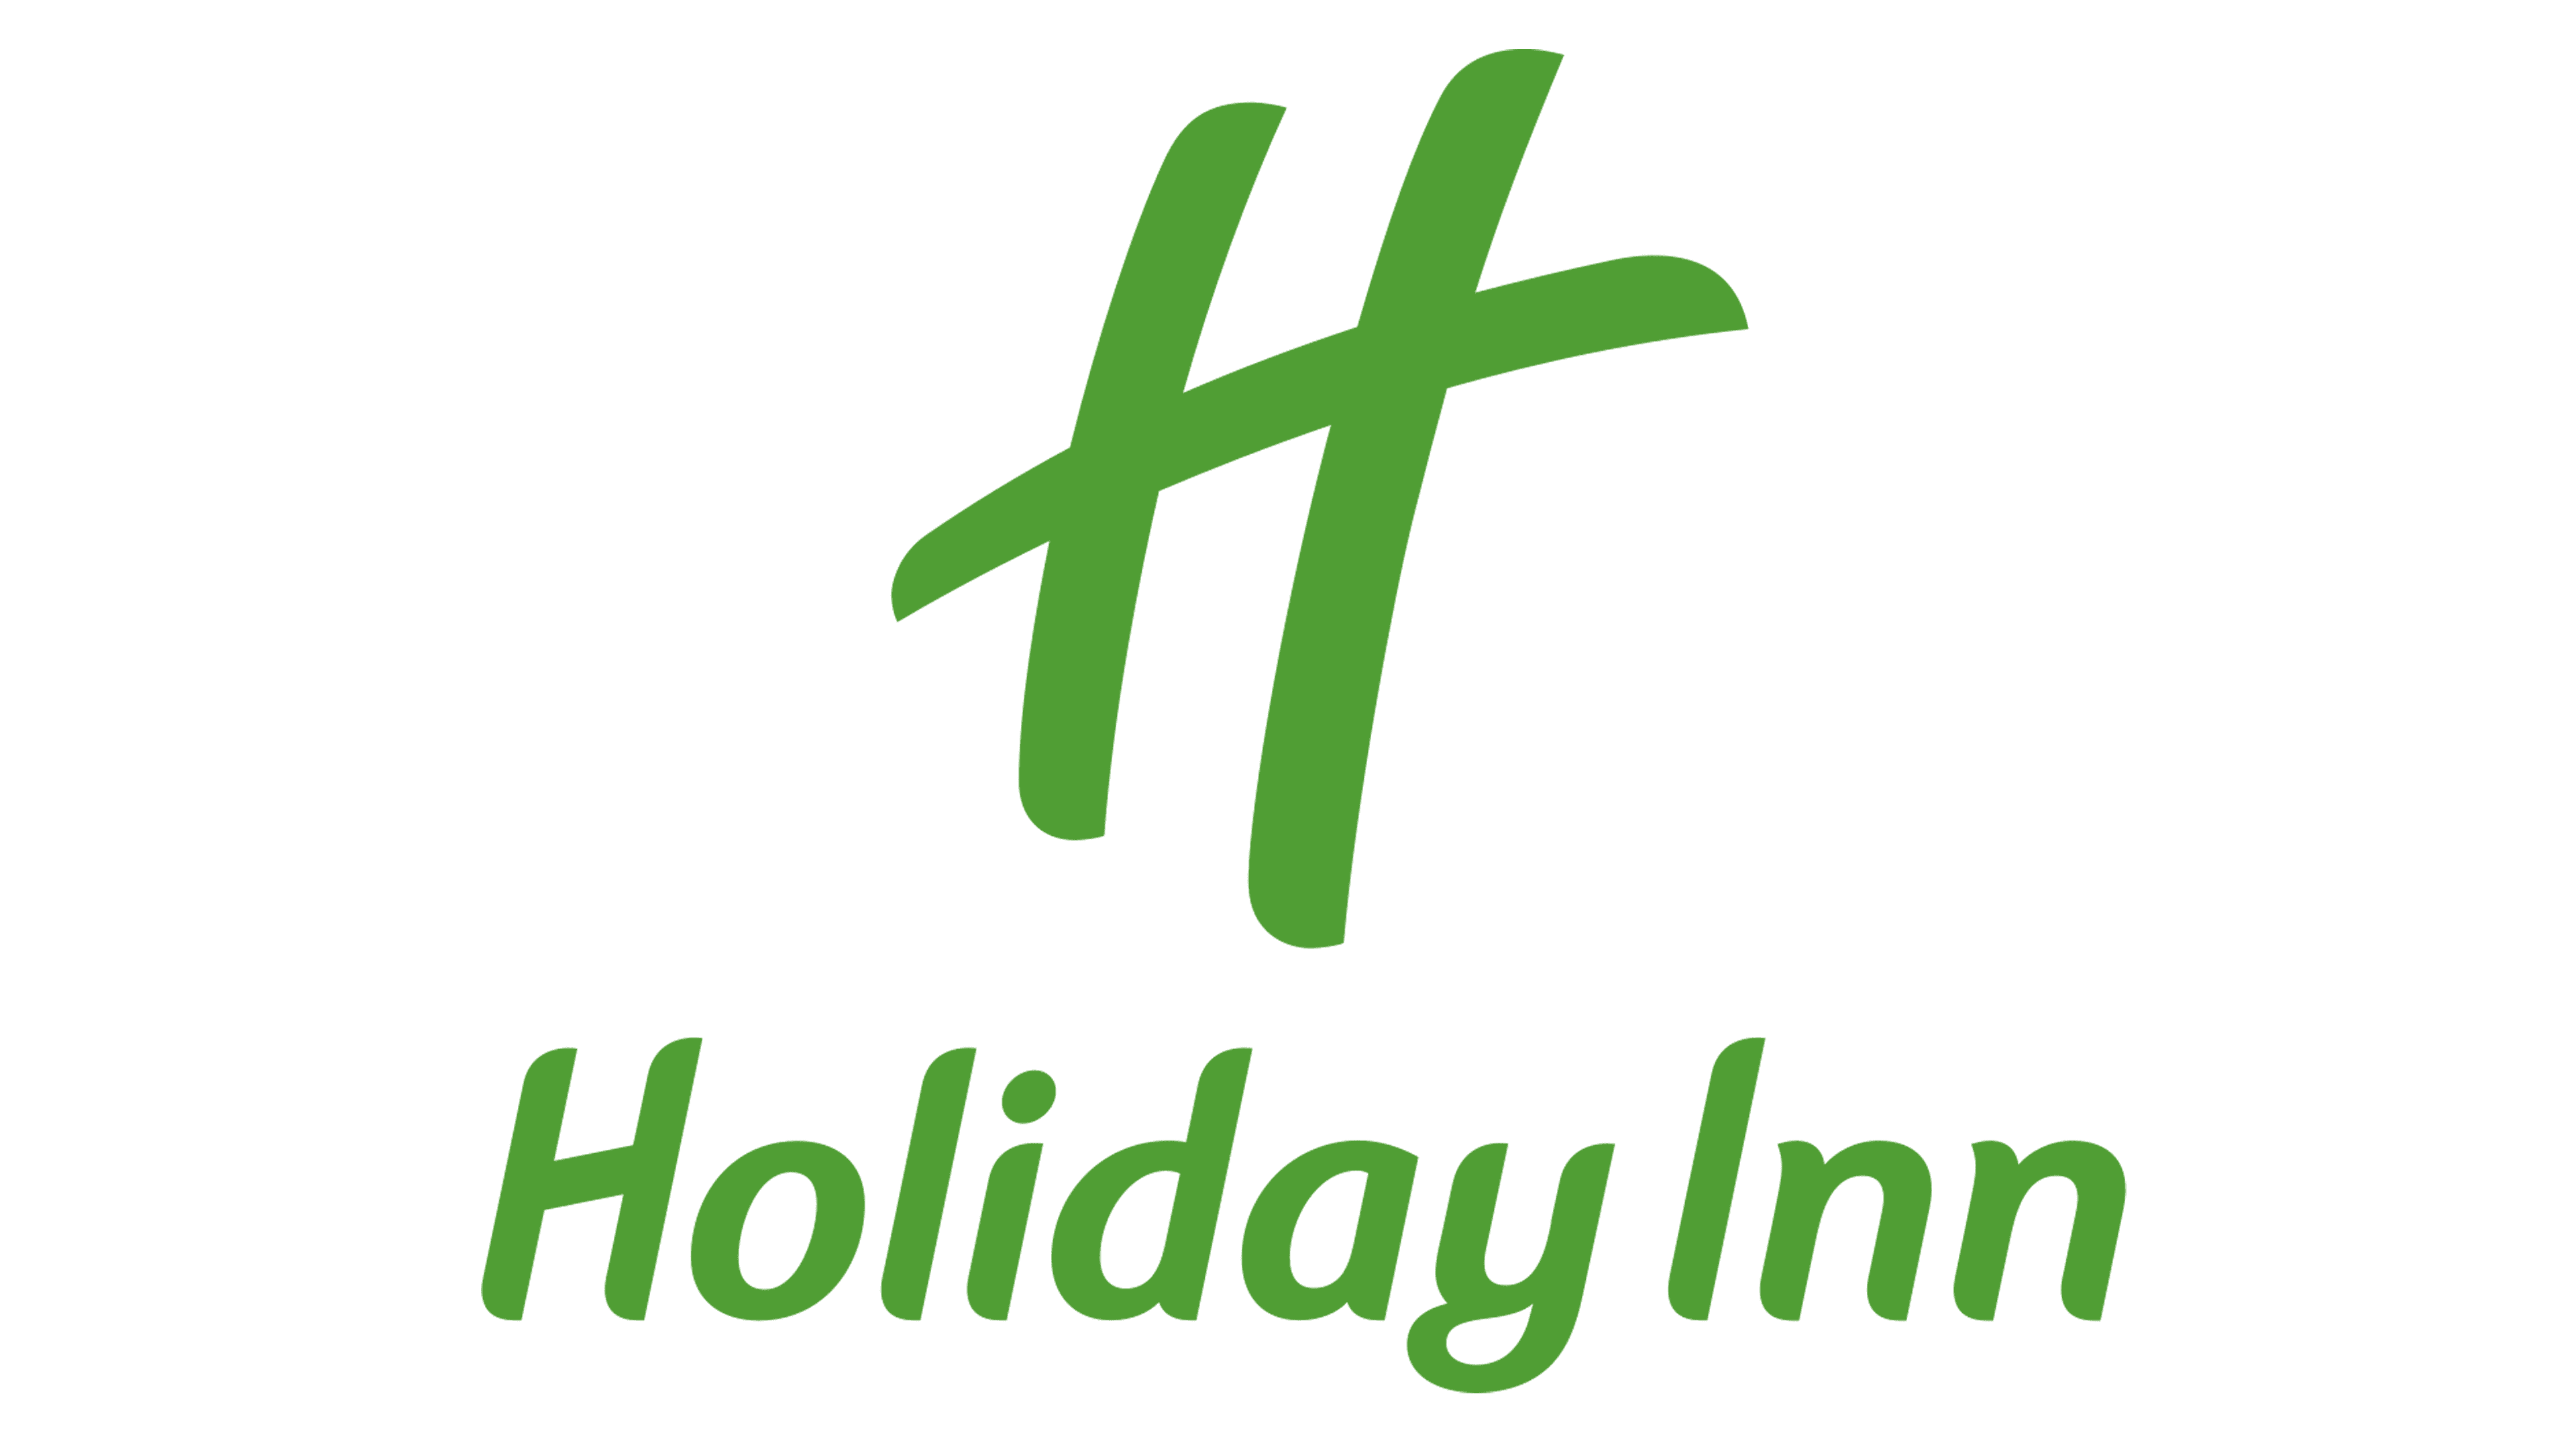 Holiday Inn Logo Logo